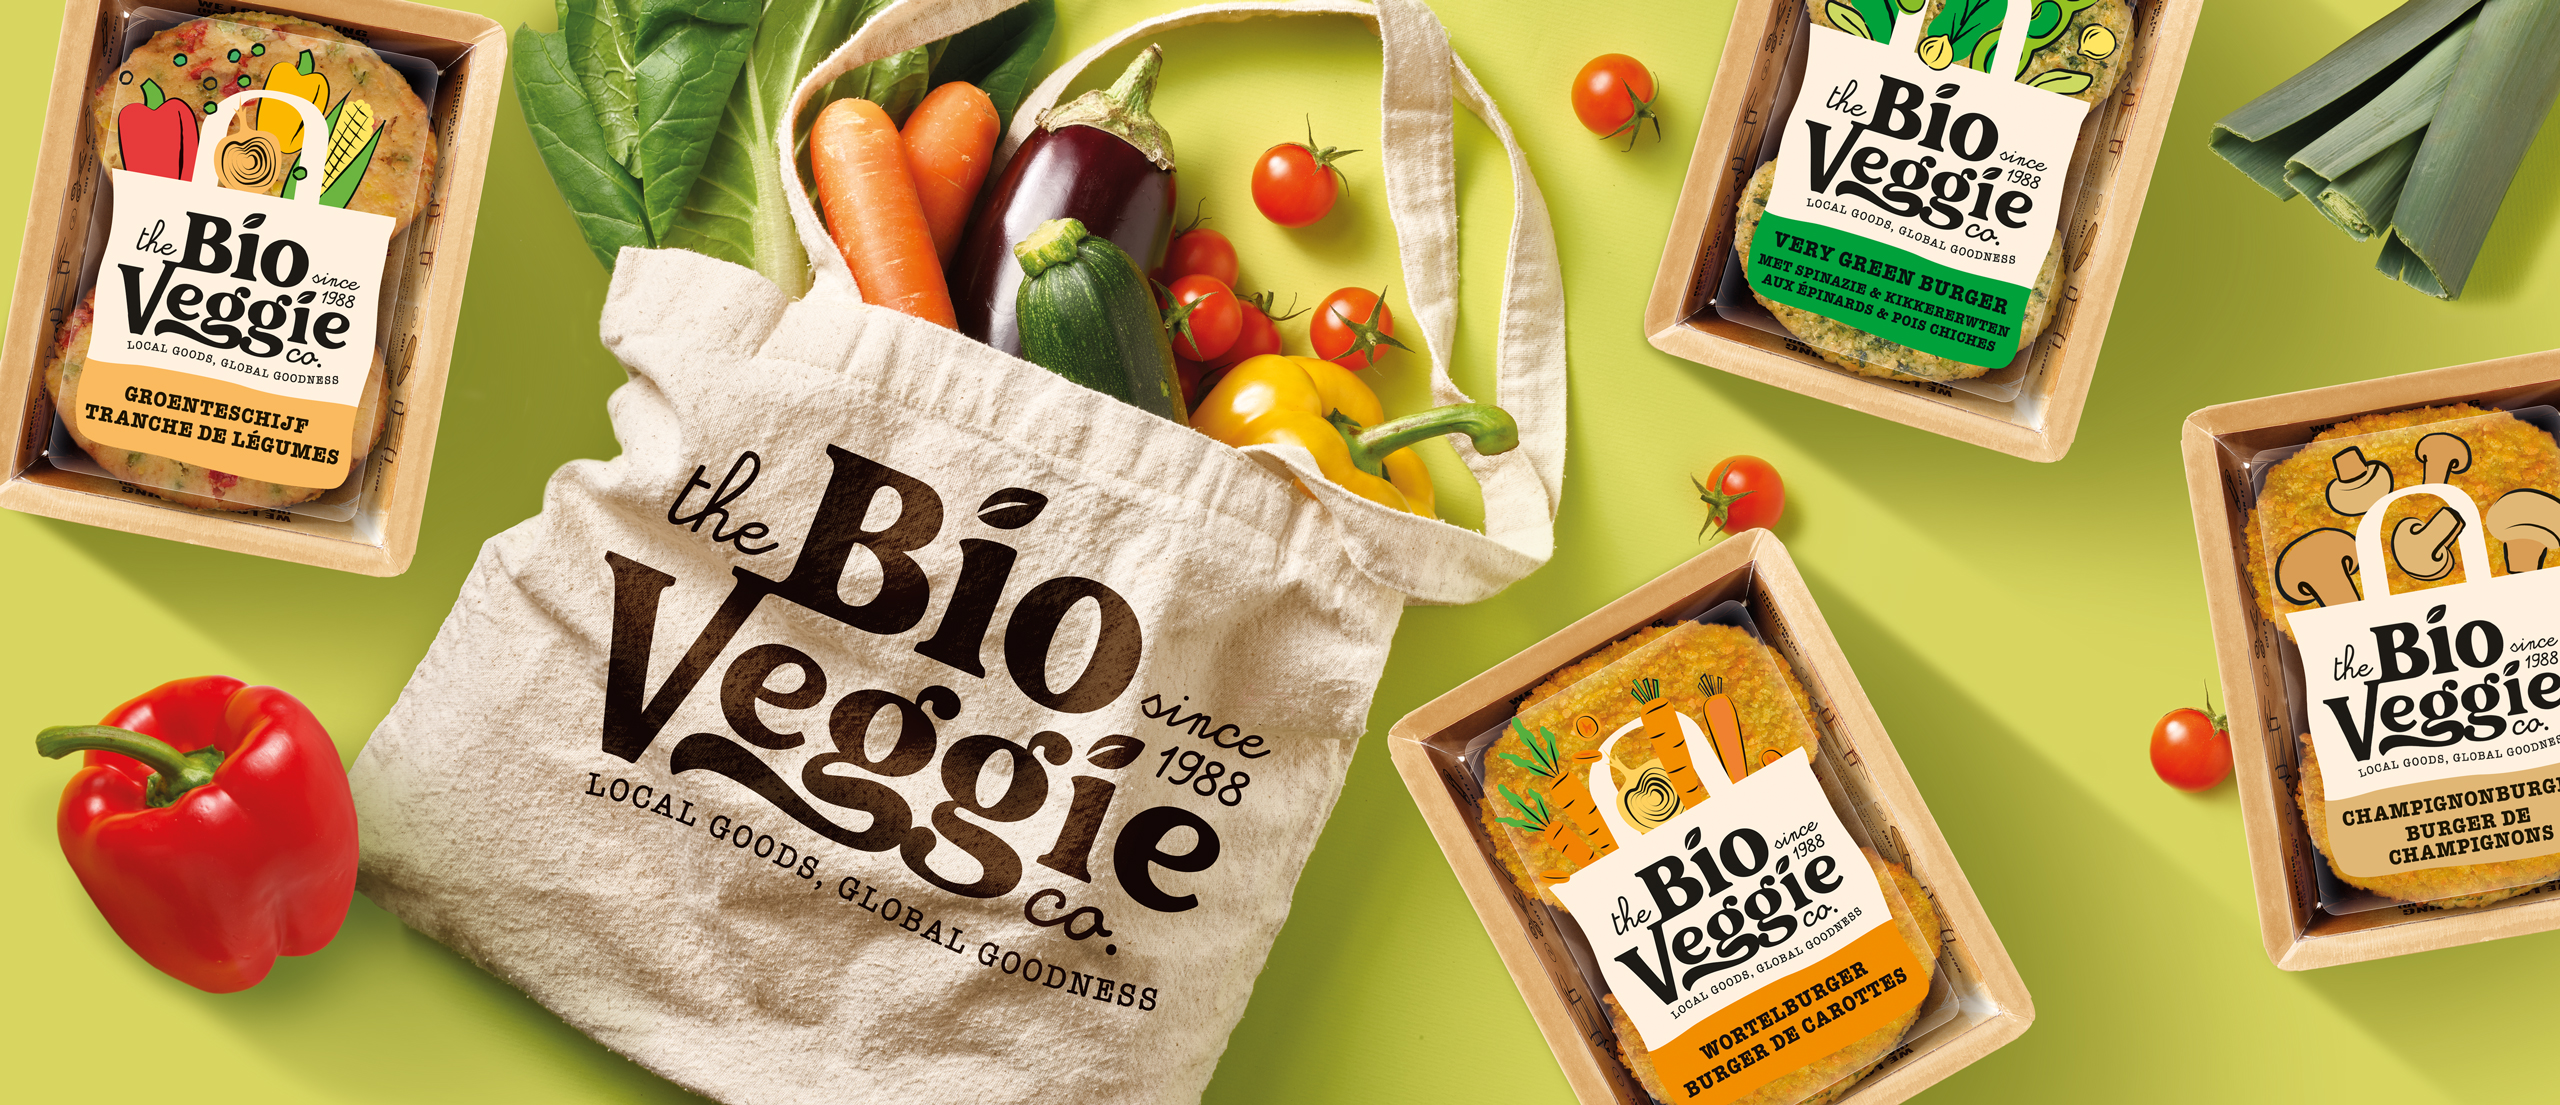 Quatre Mains package design - Package design Redesign for The Bio Veggie Company